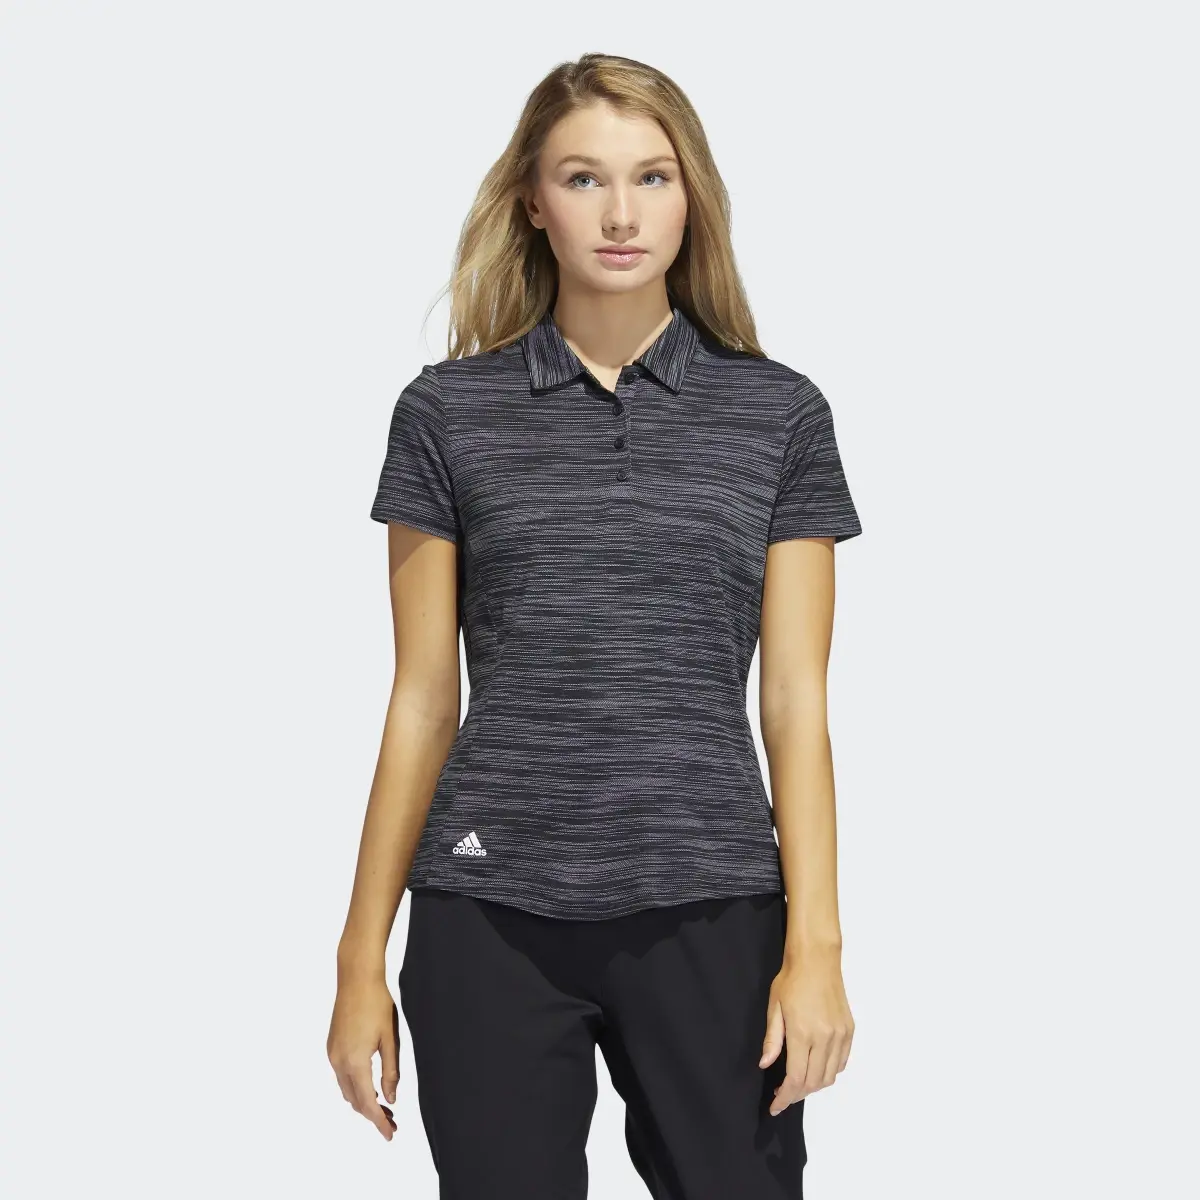 Adidas Space-Dyed Short Sleeve Golf Polo Shirt. 2